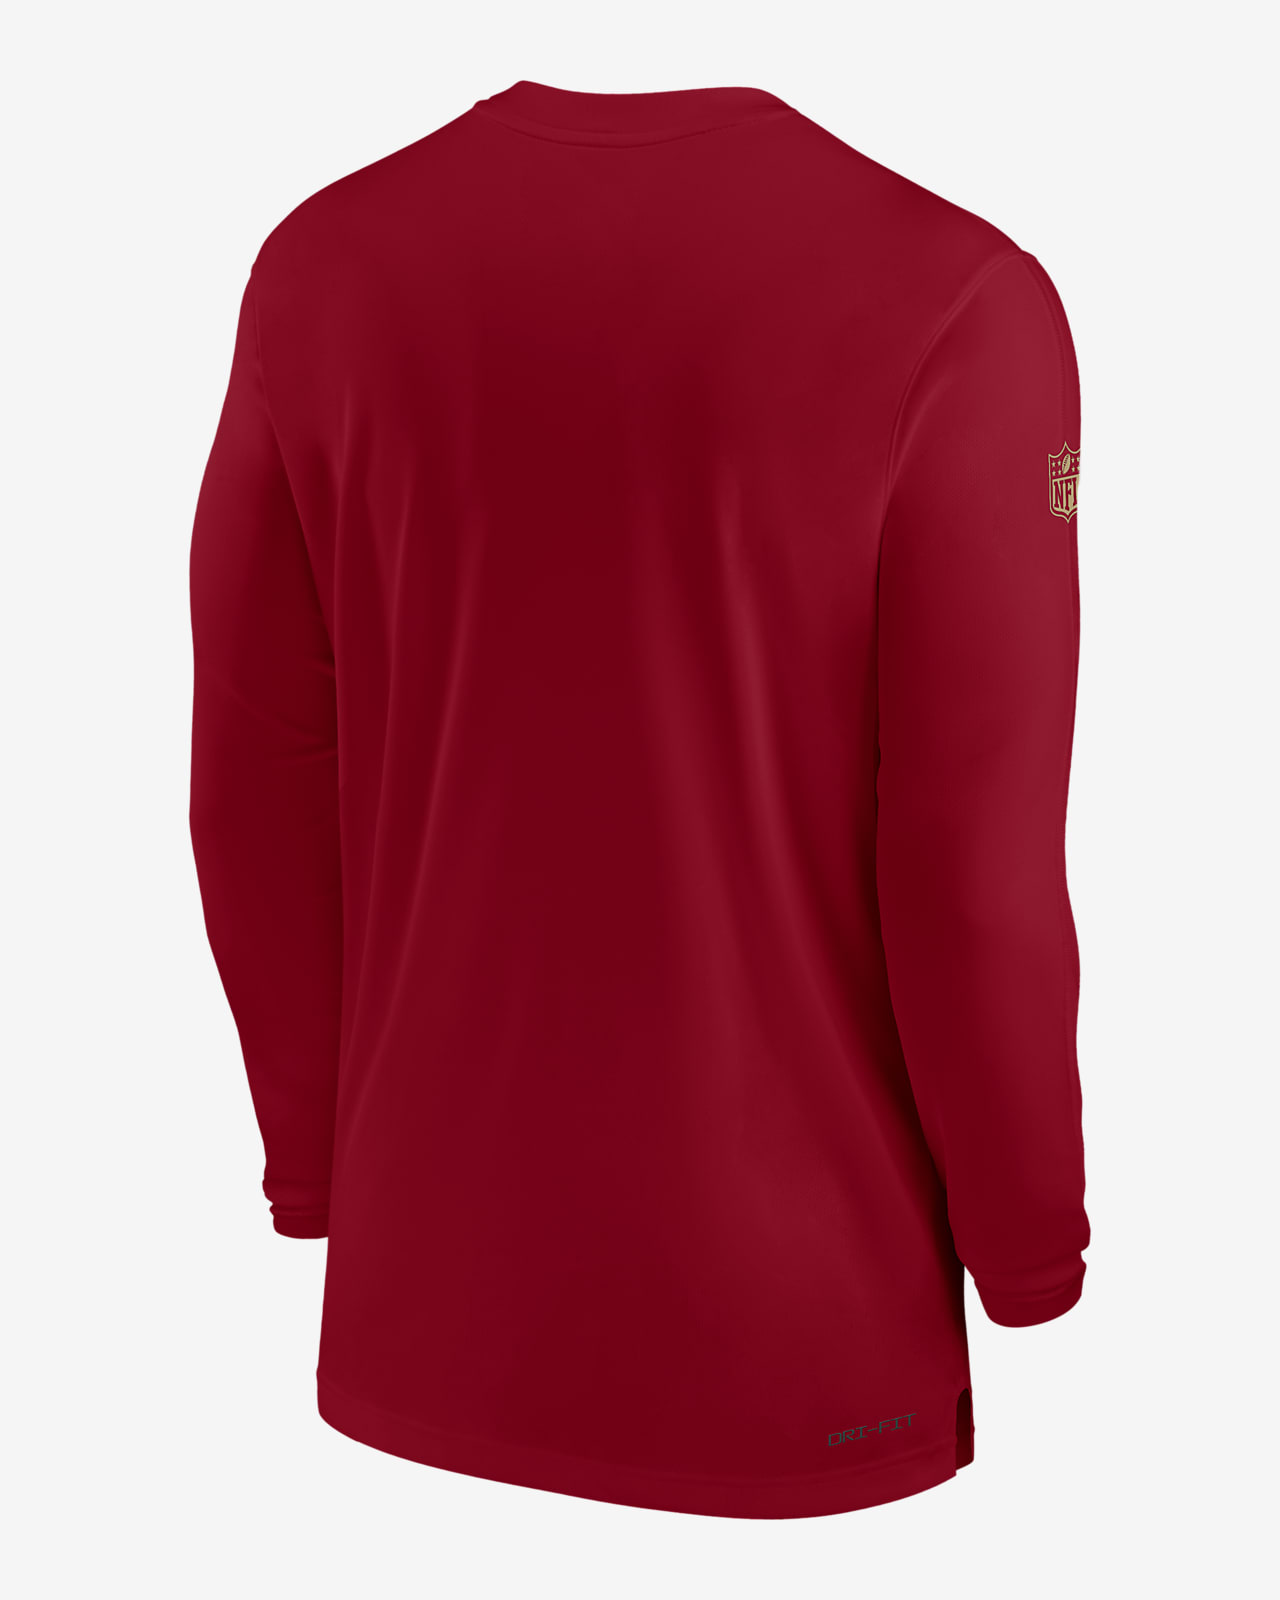 49ers nike dri fit shirt